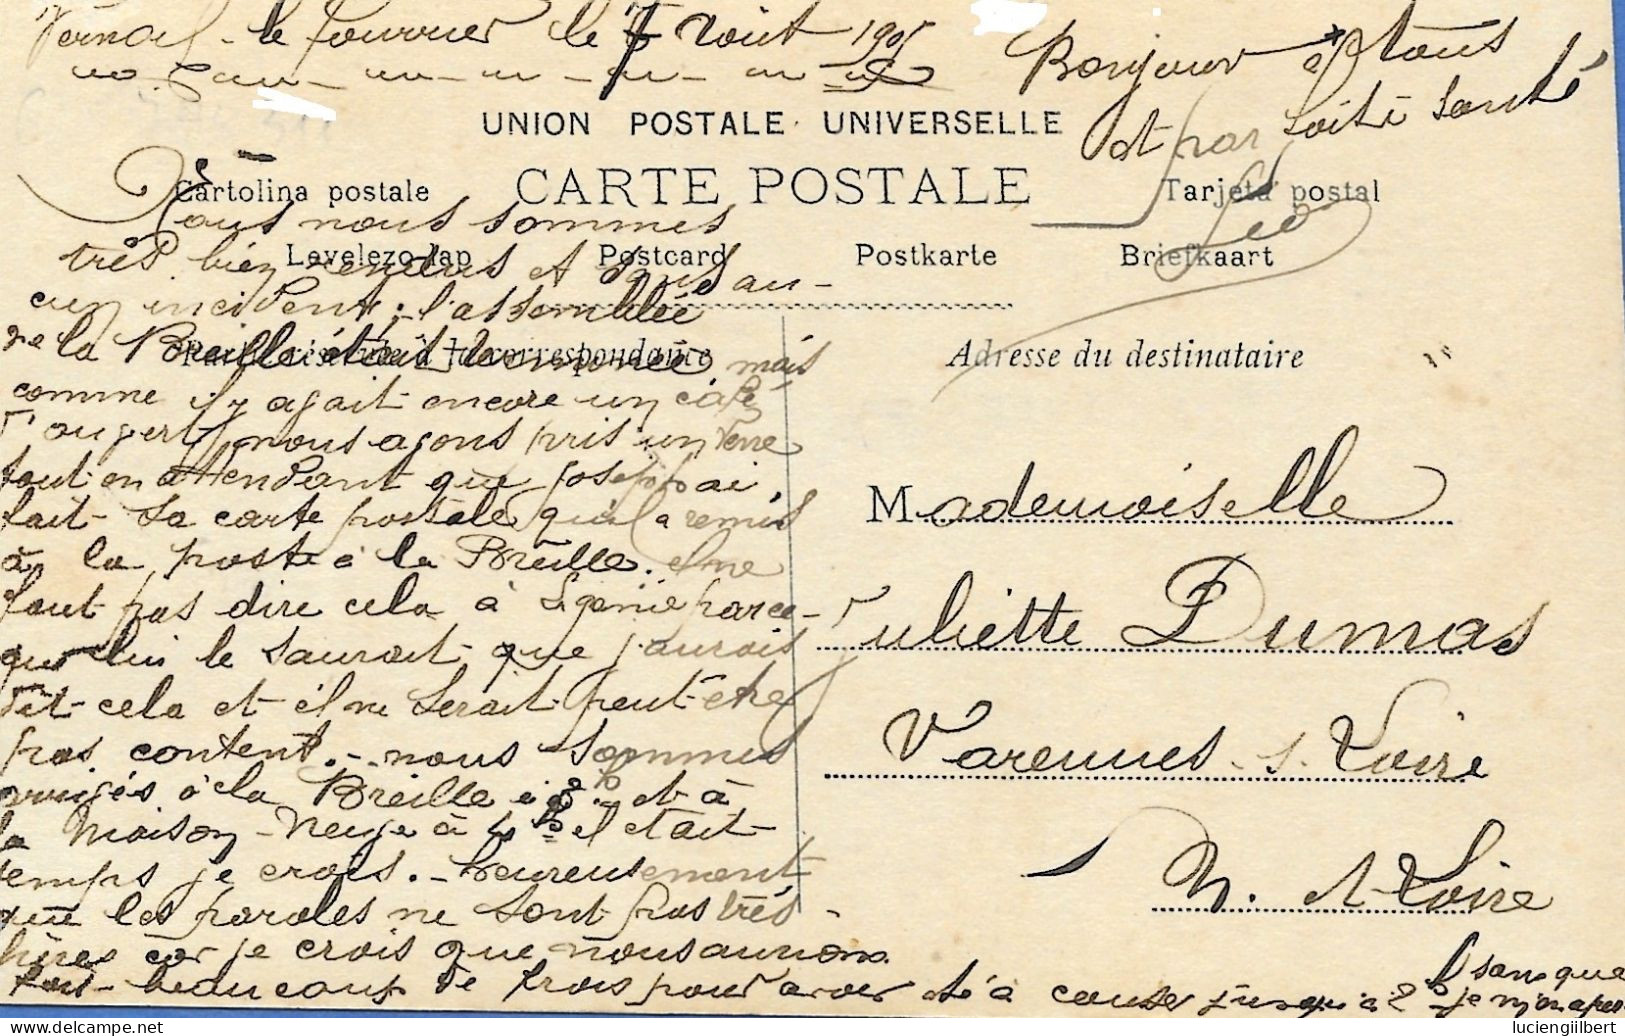 CARTE FANTAISIE - ANNEE 1900 - MESSAGE AFECTUEUX - CIRCULEE - COLLECTION JULIETTE ET ROMEO